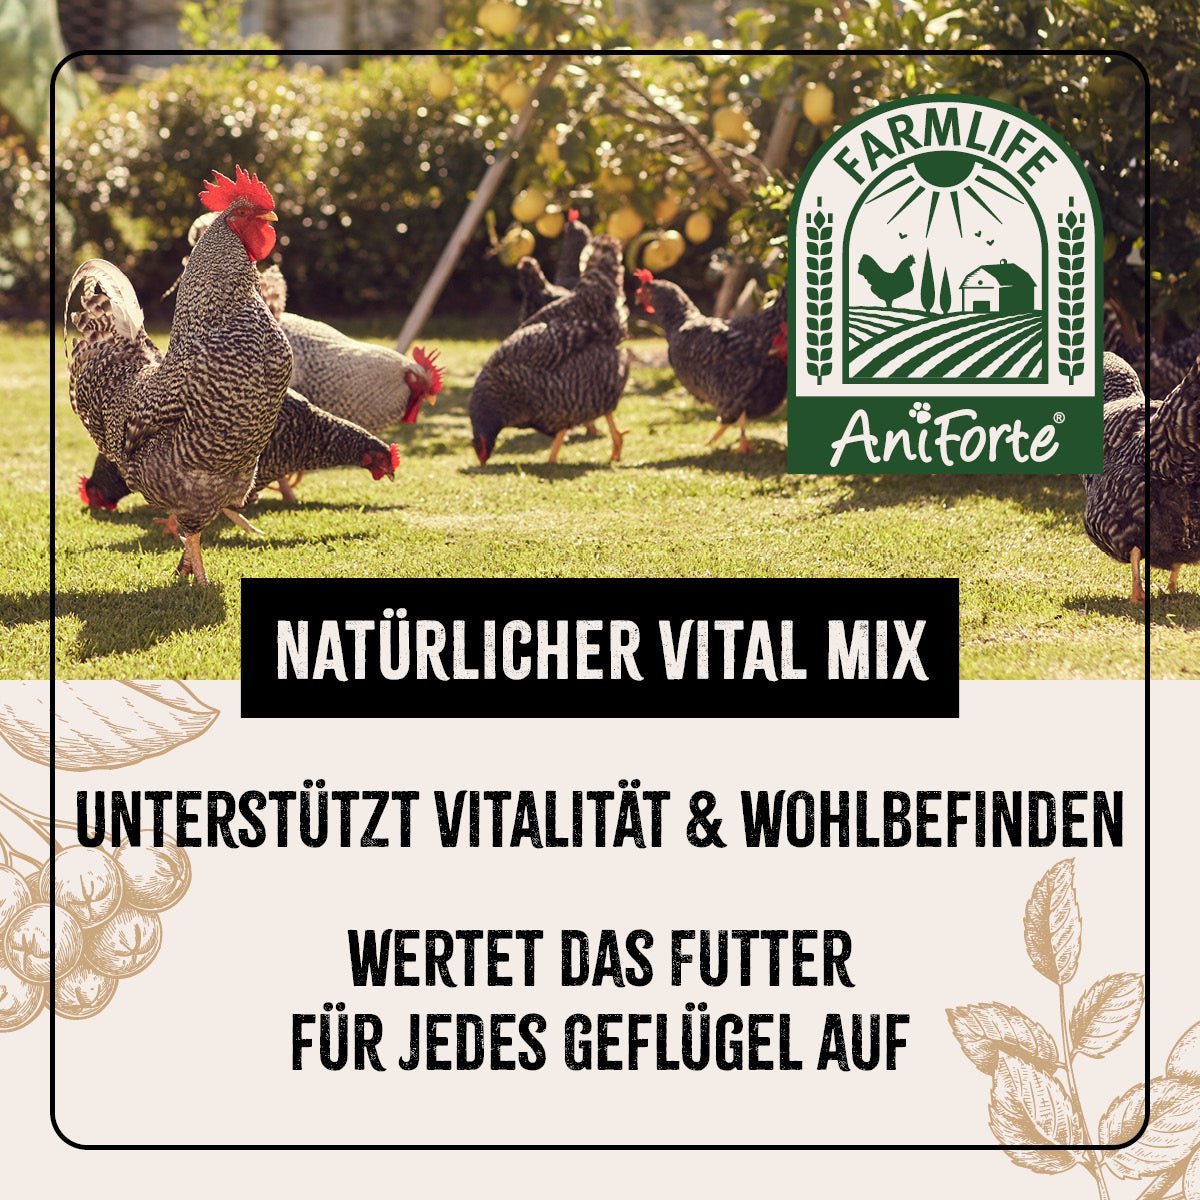 FarmLife Geflügel Vital Mix Pulver - AniForte